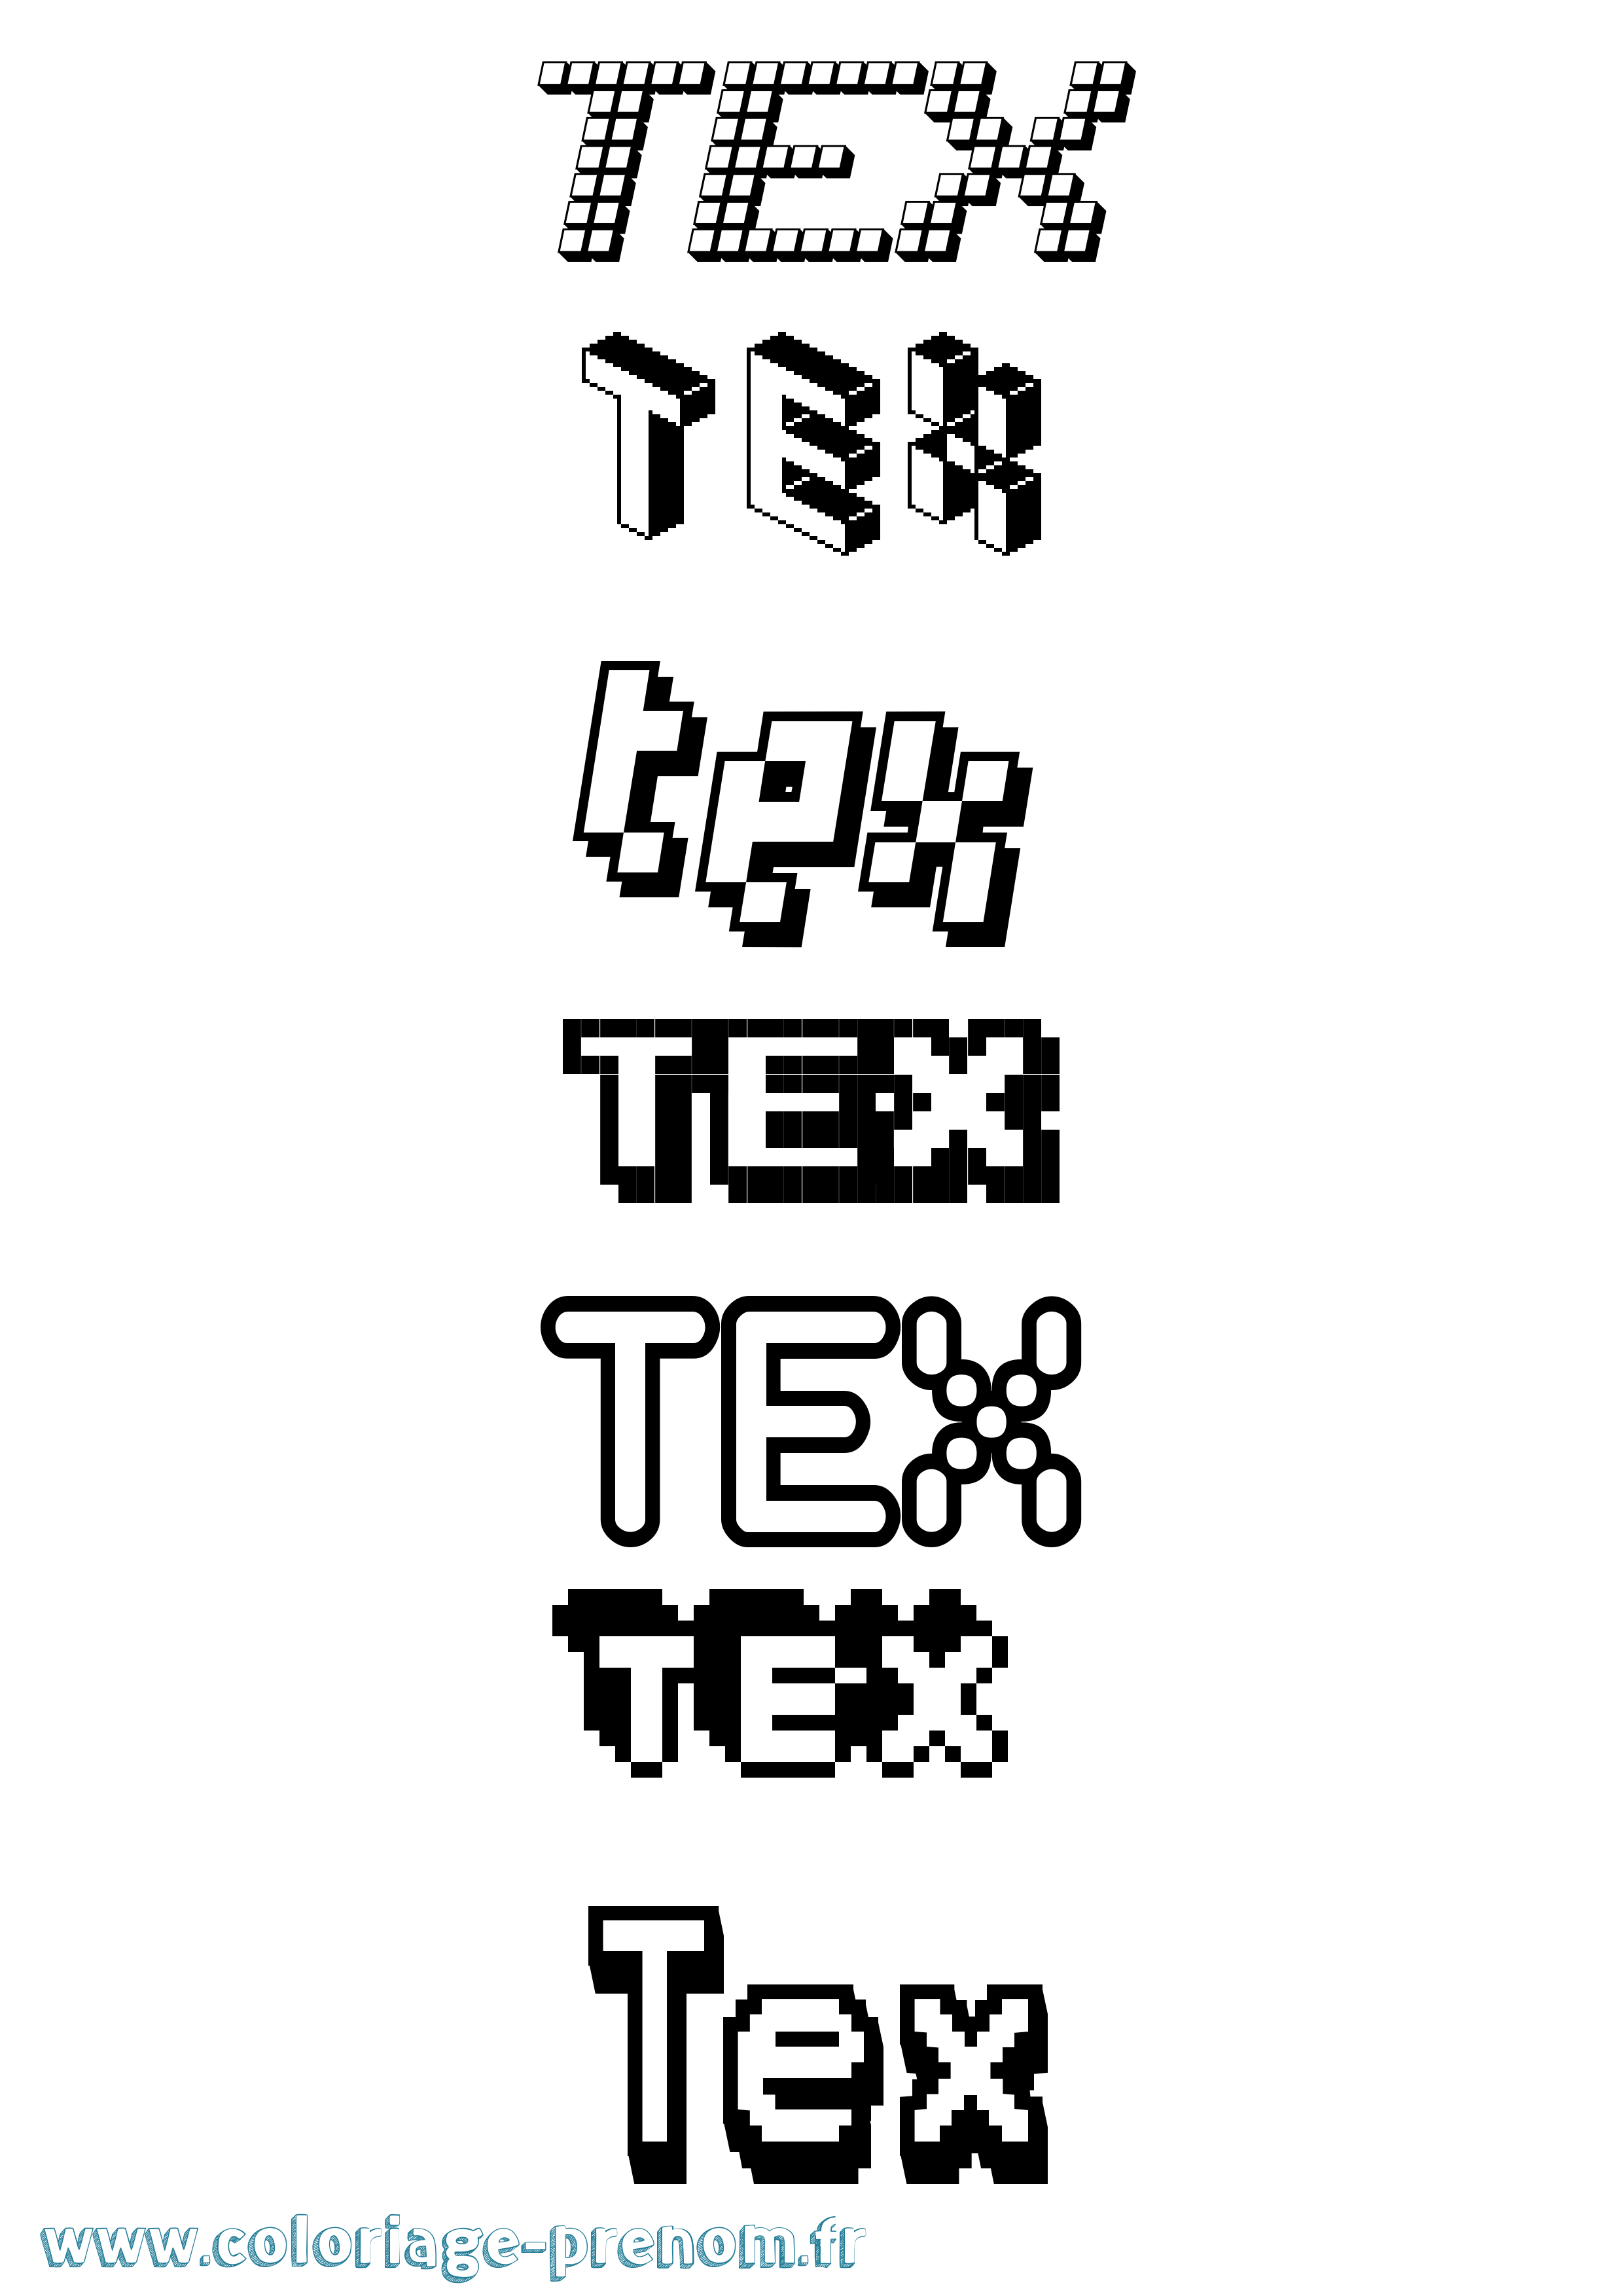 Coloriage prénom Tex Pixel